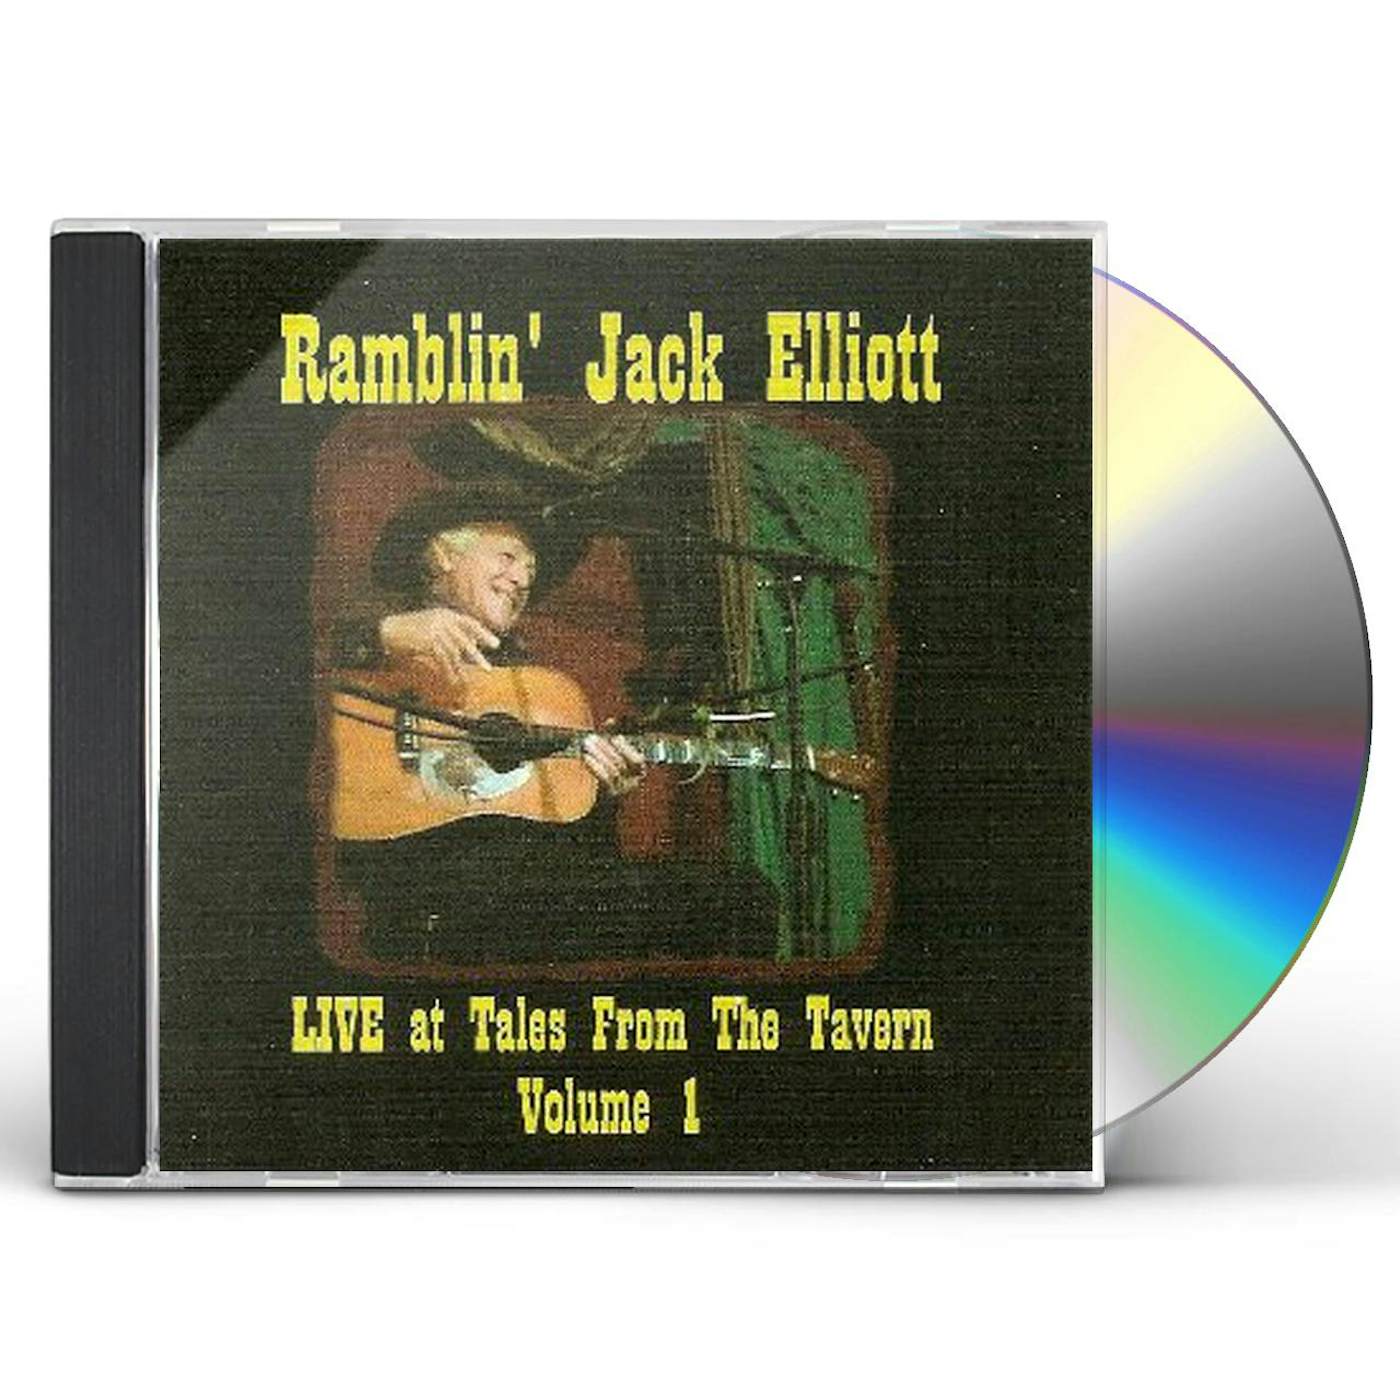 Ramblin' Jack Elliot LIVE AT TALES FROM THE TAVERN CD